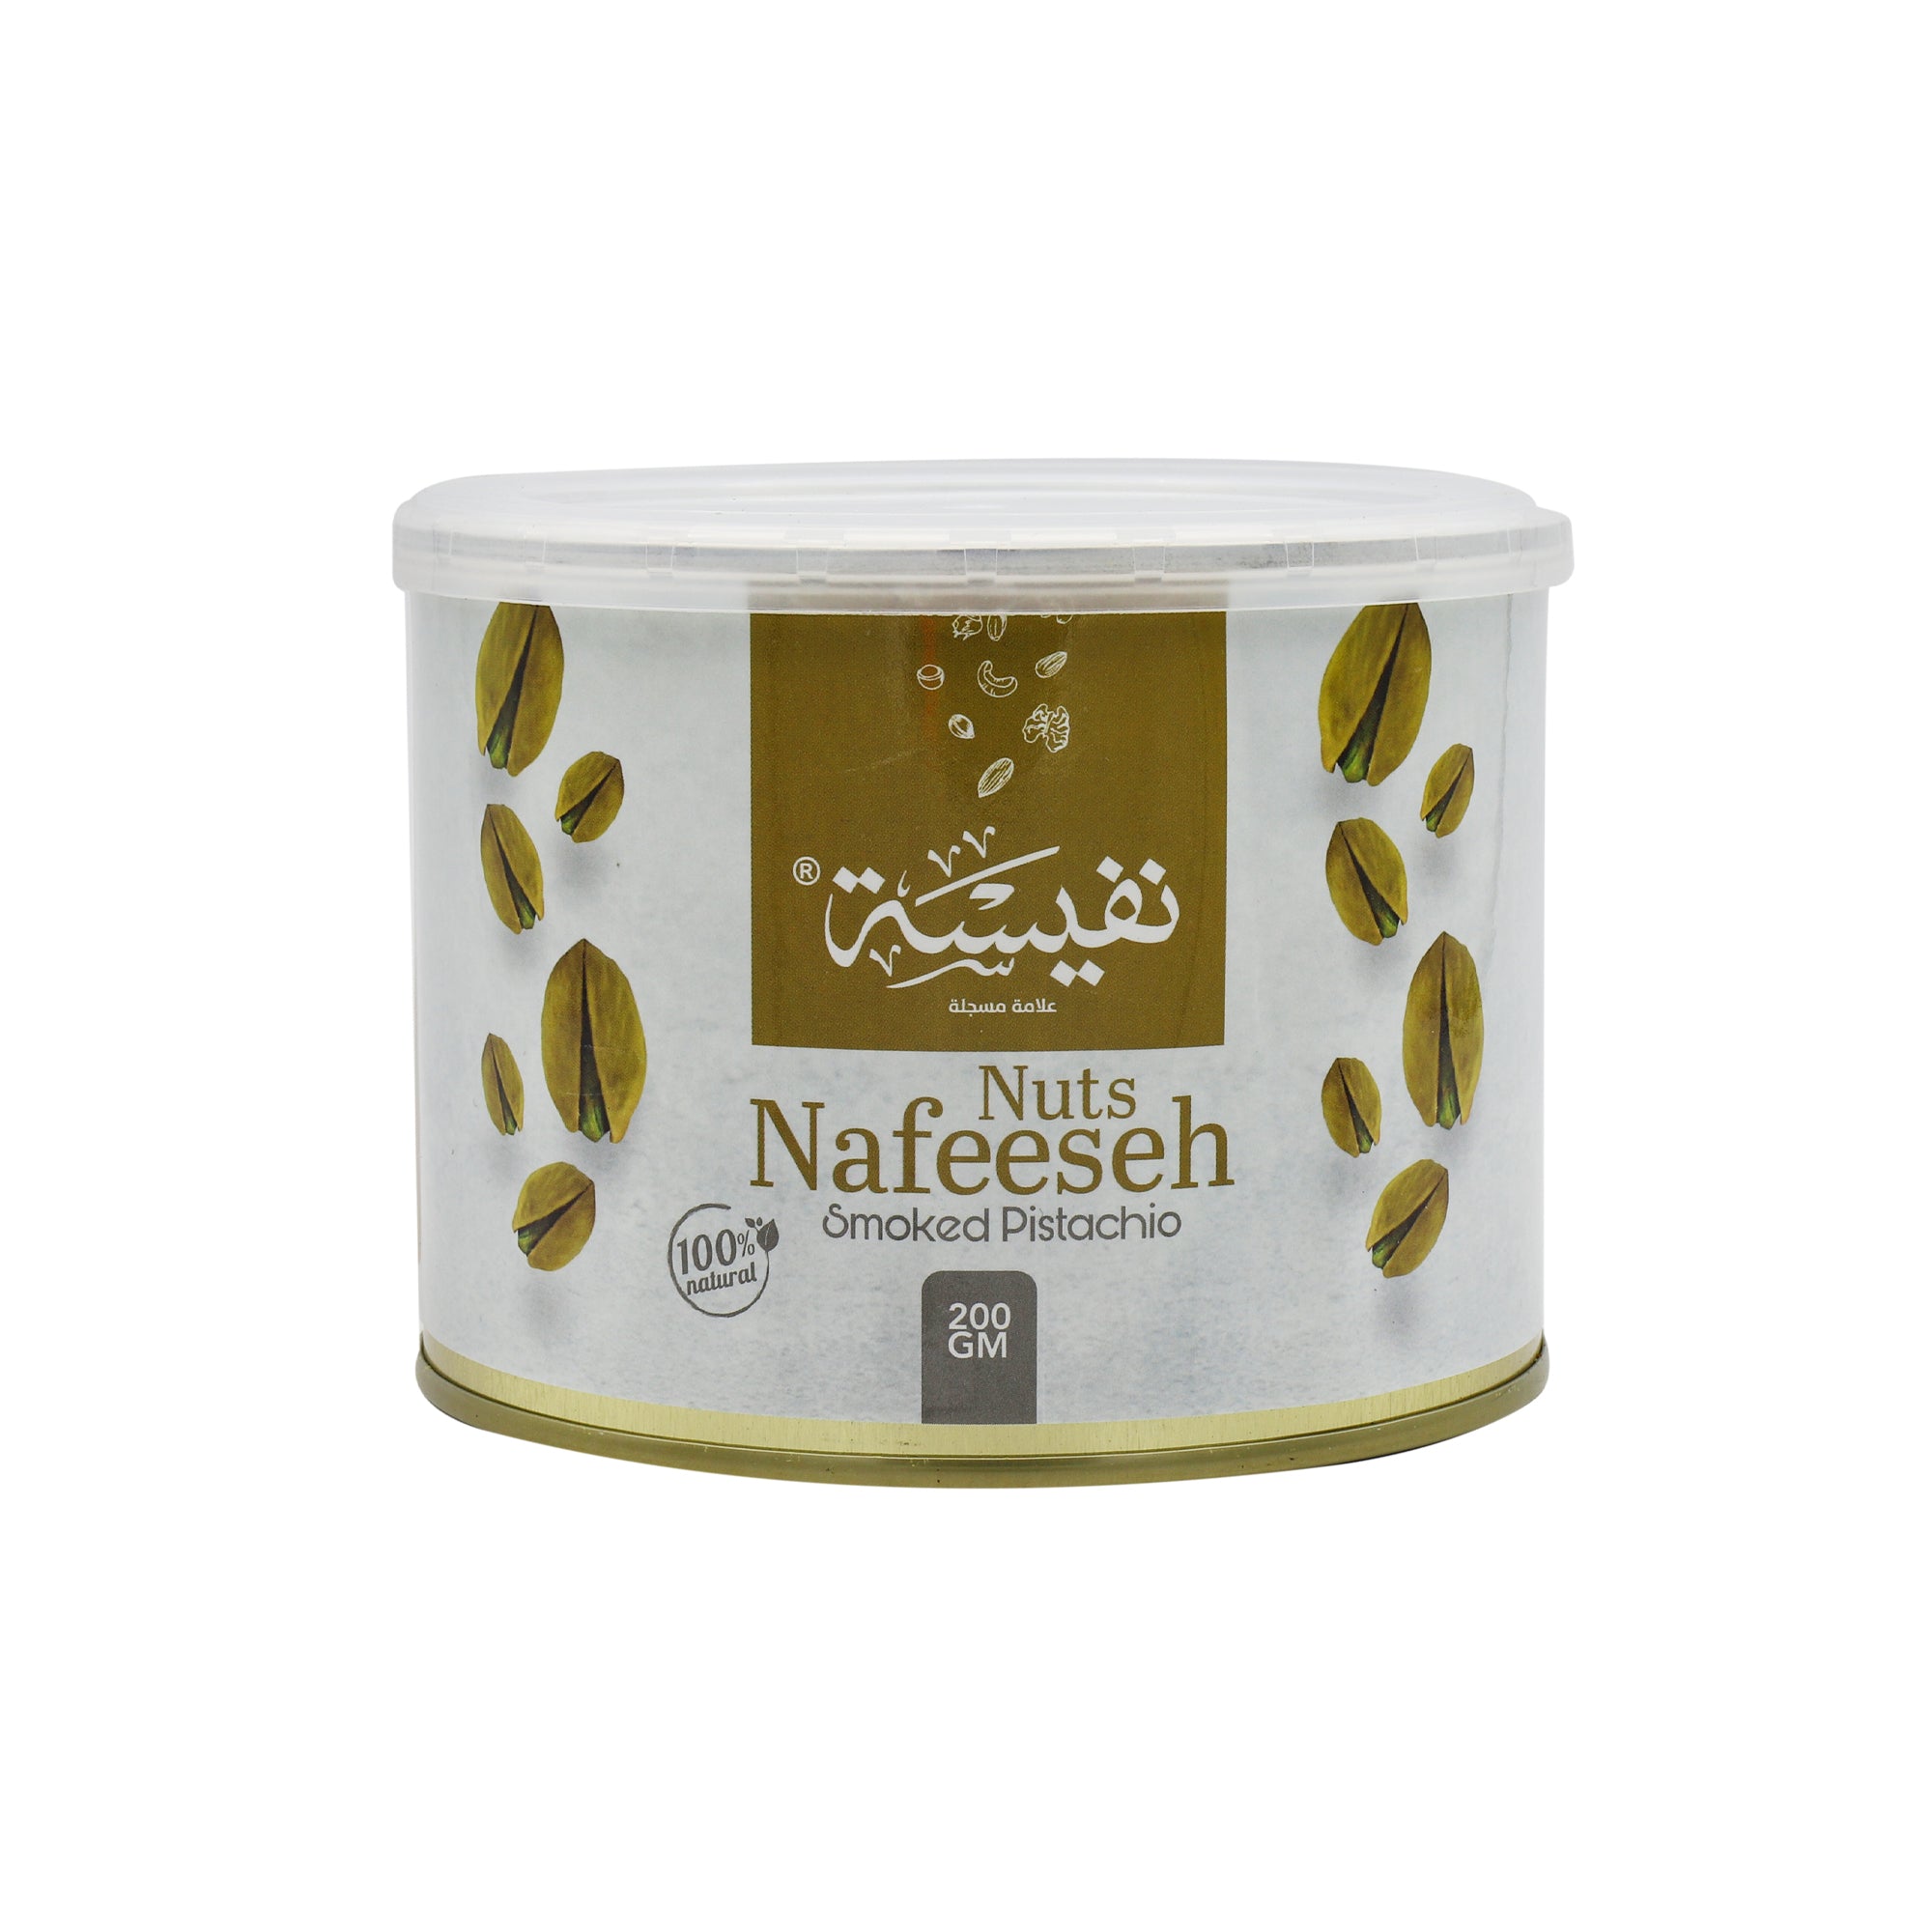 Nafeeseh smoked pistachio